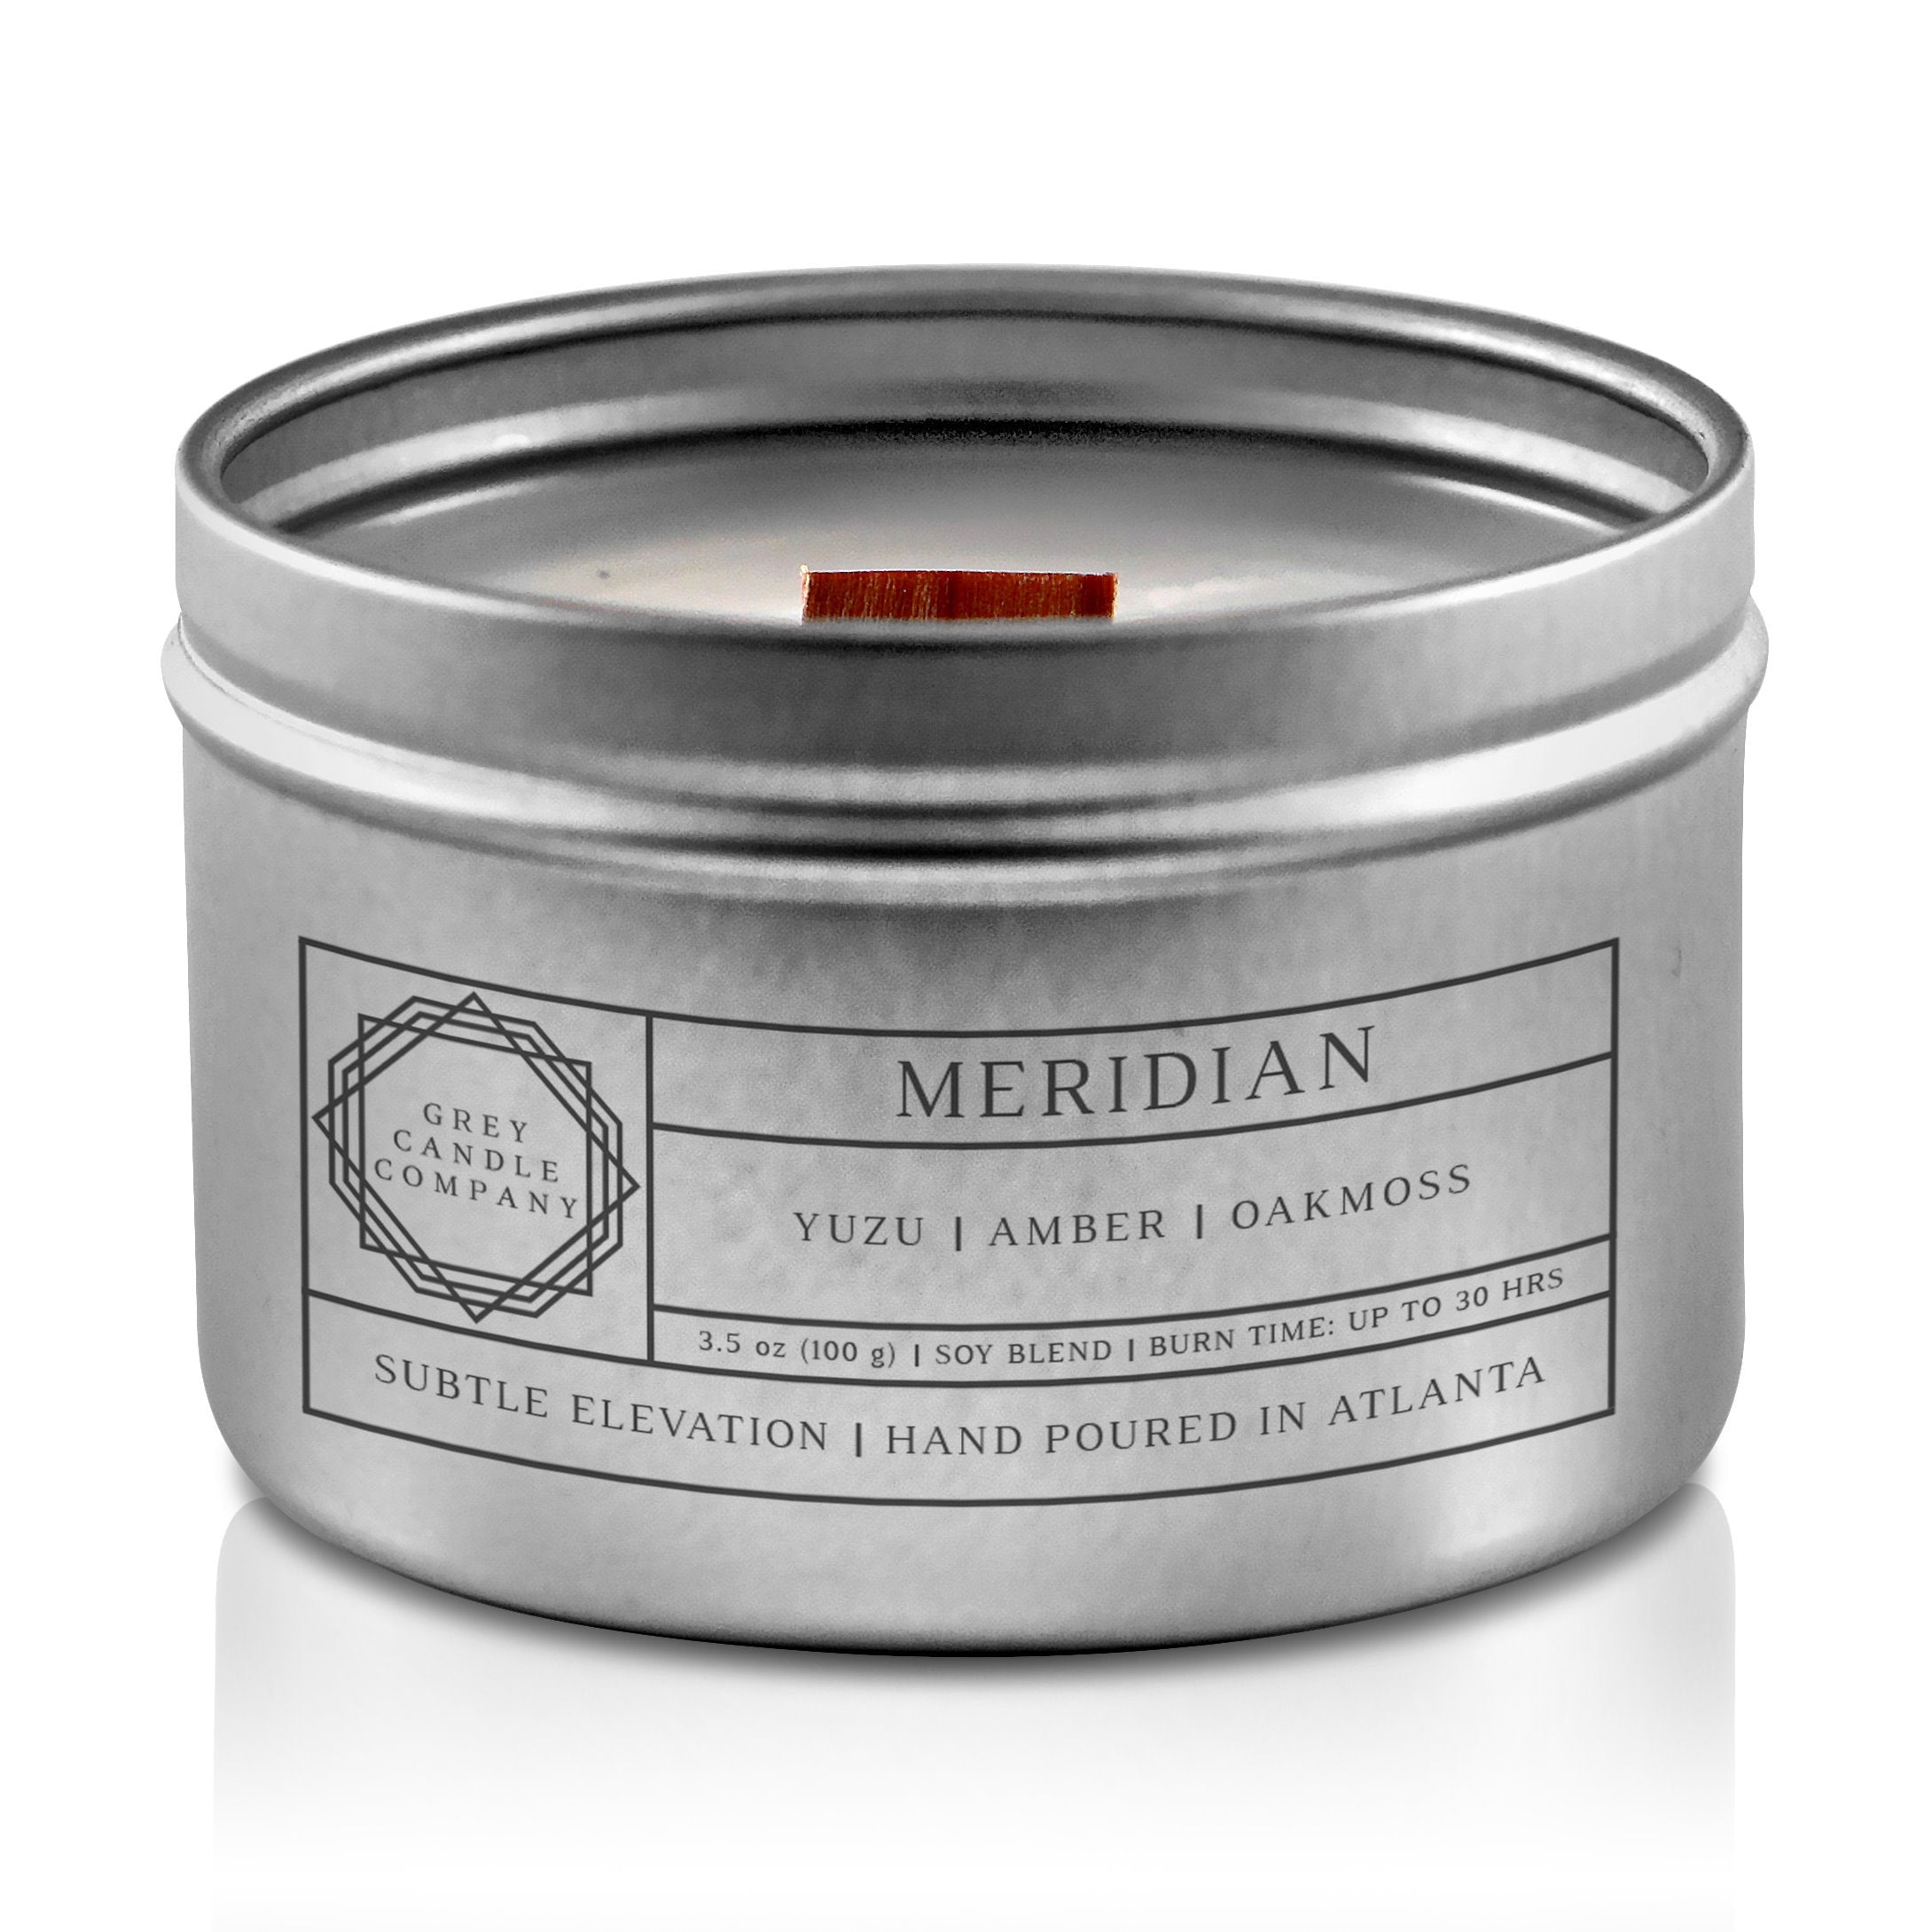 MERIDIAN CANDLES Grey Candle Company 3.5 oz. TIN 